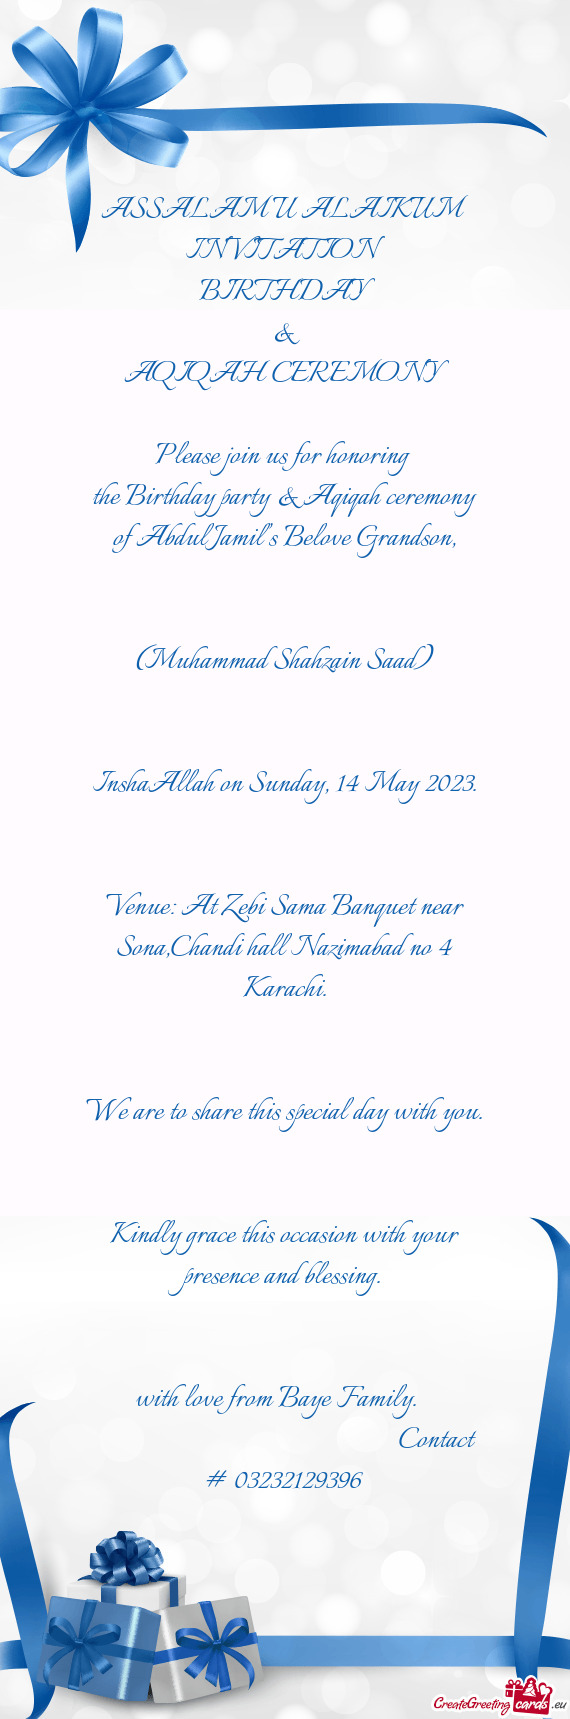 Venue: At Zebi Sama Banquet near Sona,Chandi hall Nazimabad no 4 Karachi